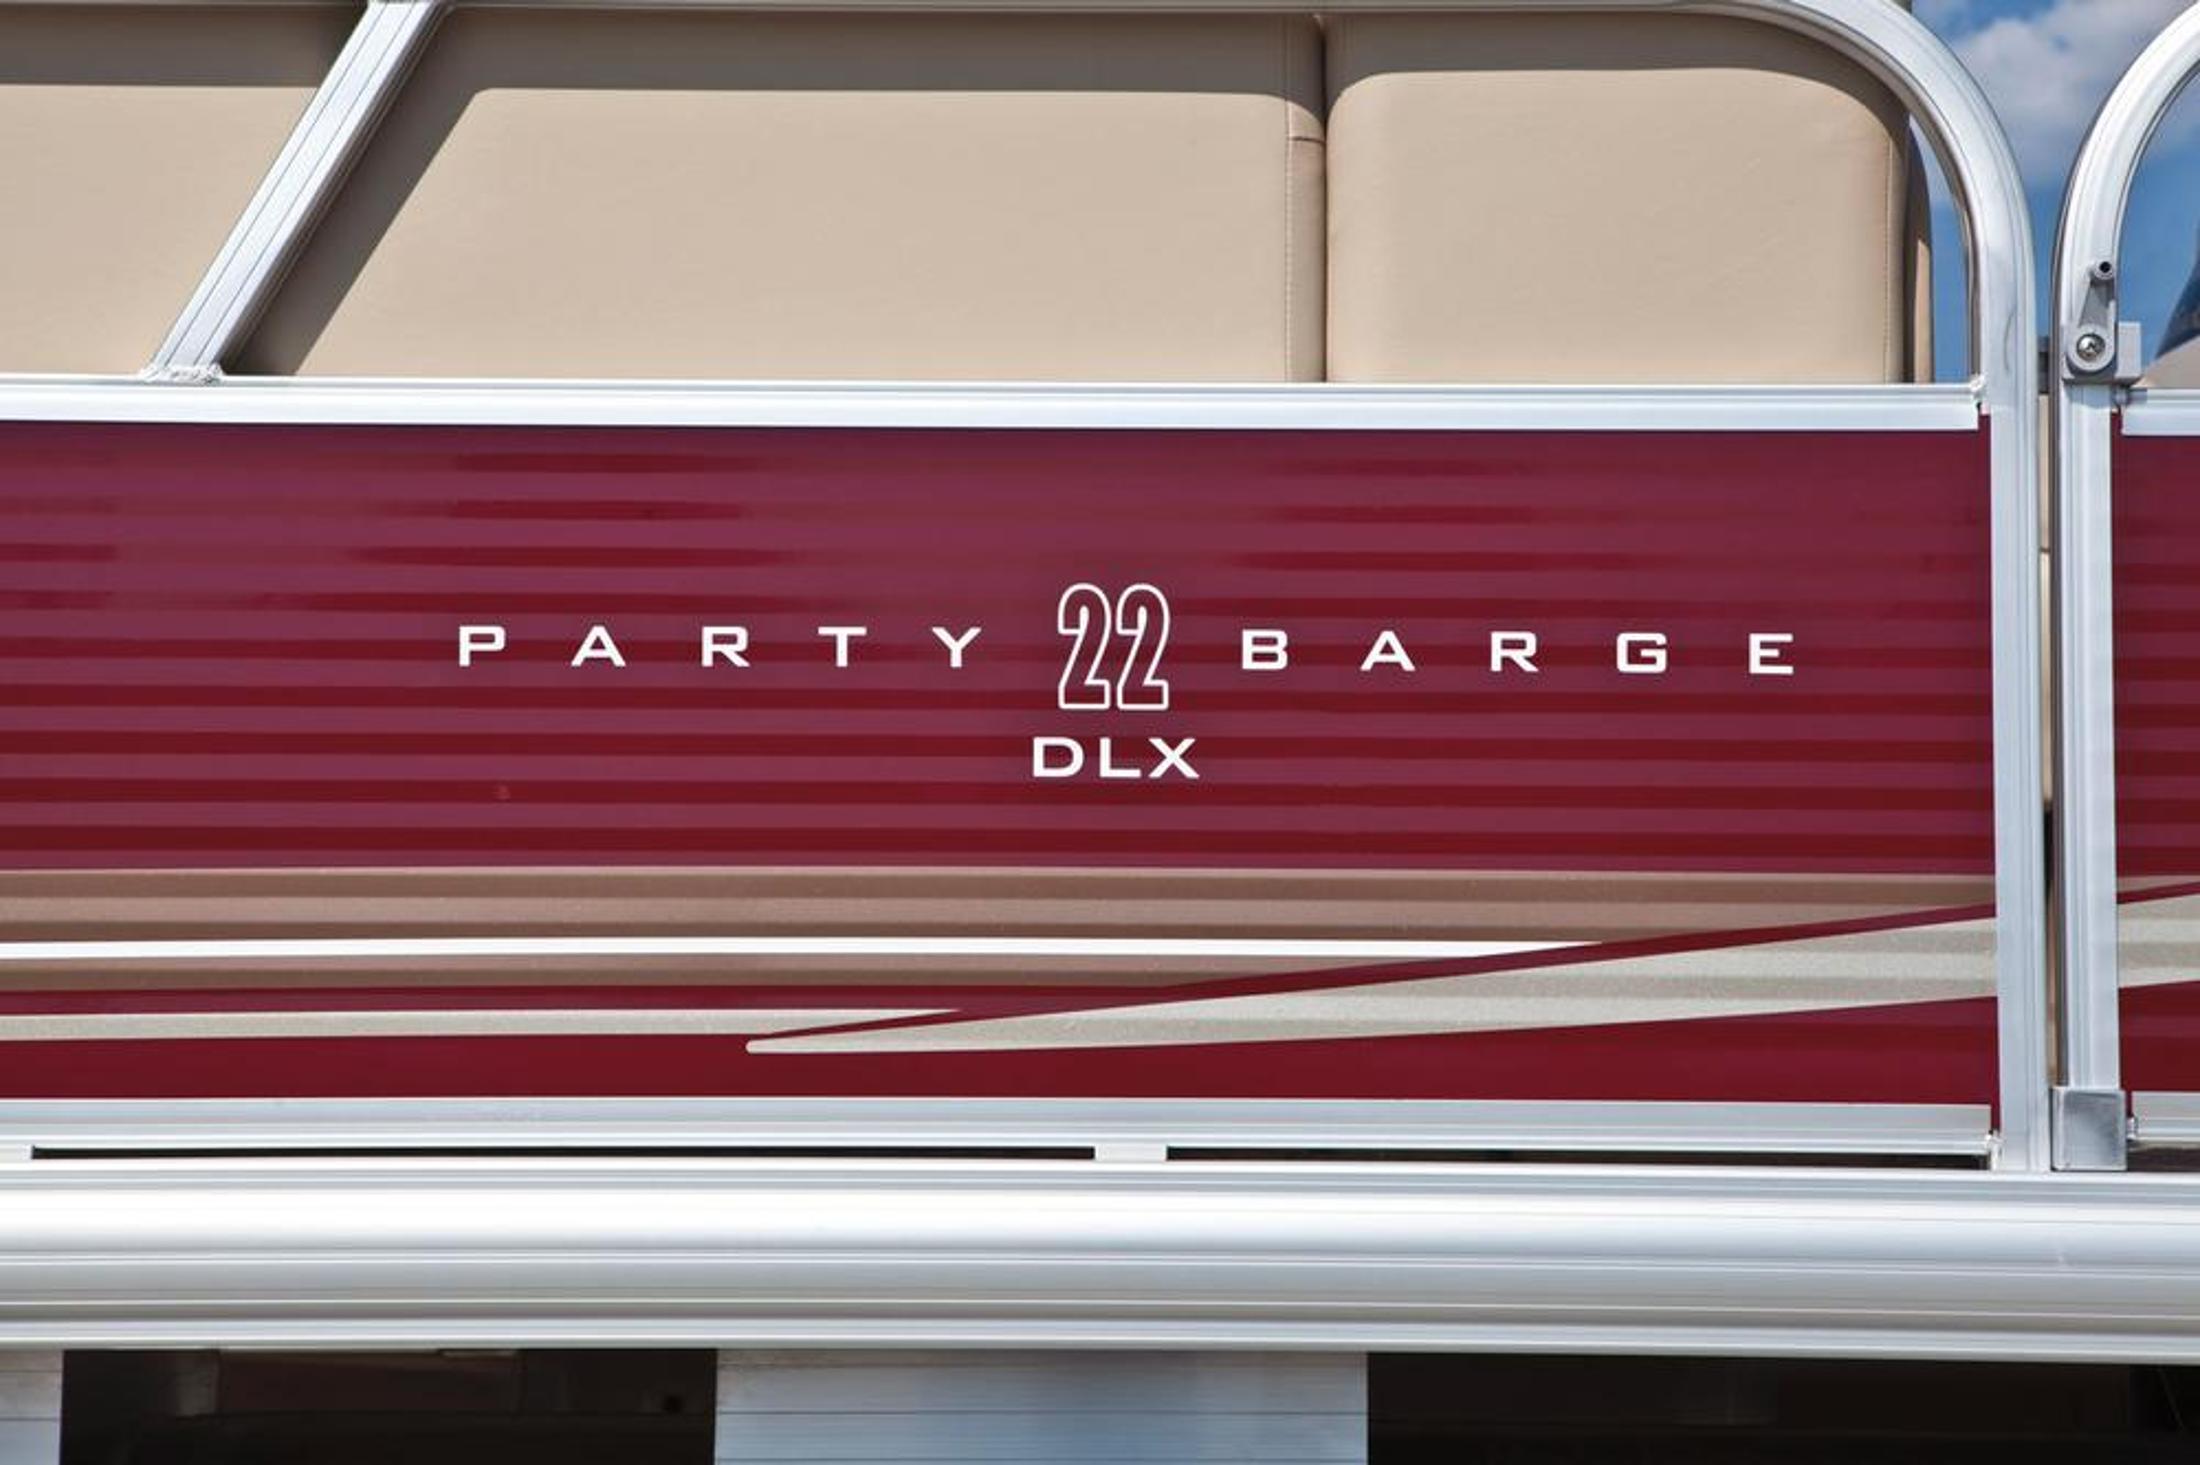 2013 Sun Tracker Party Barge 22 DLX in Rapid City, South Dakota - Photo 55